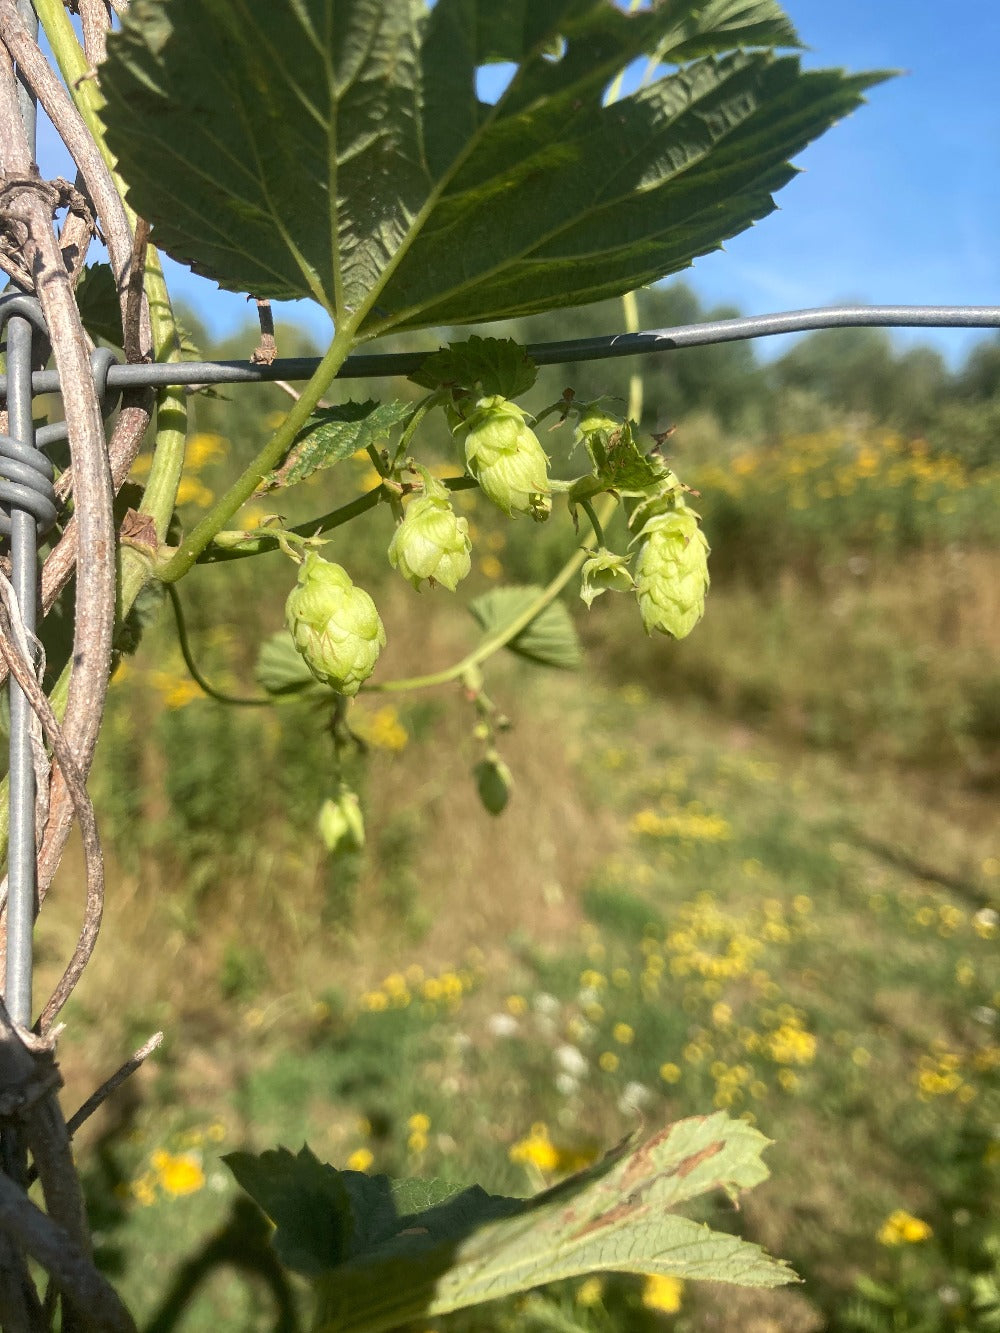 hops on vine growing